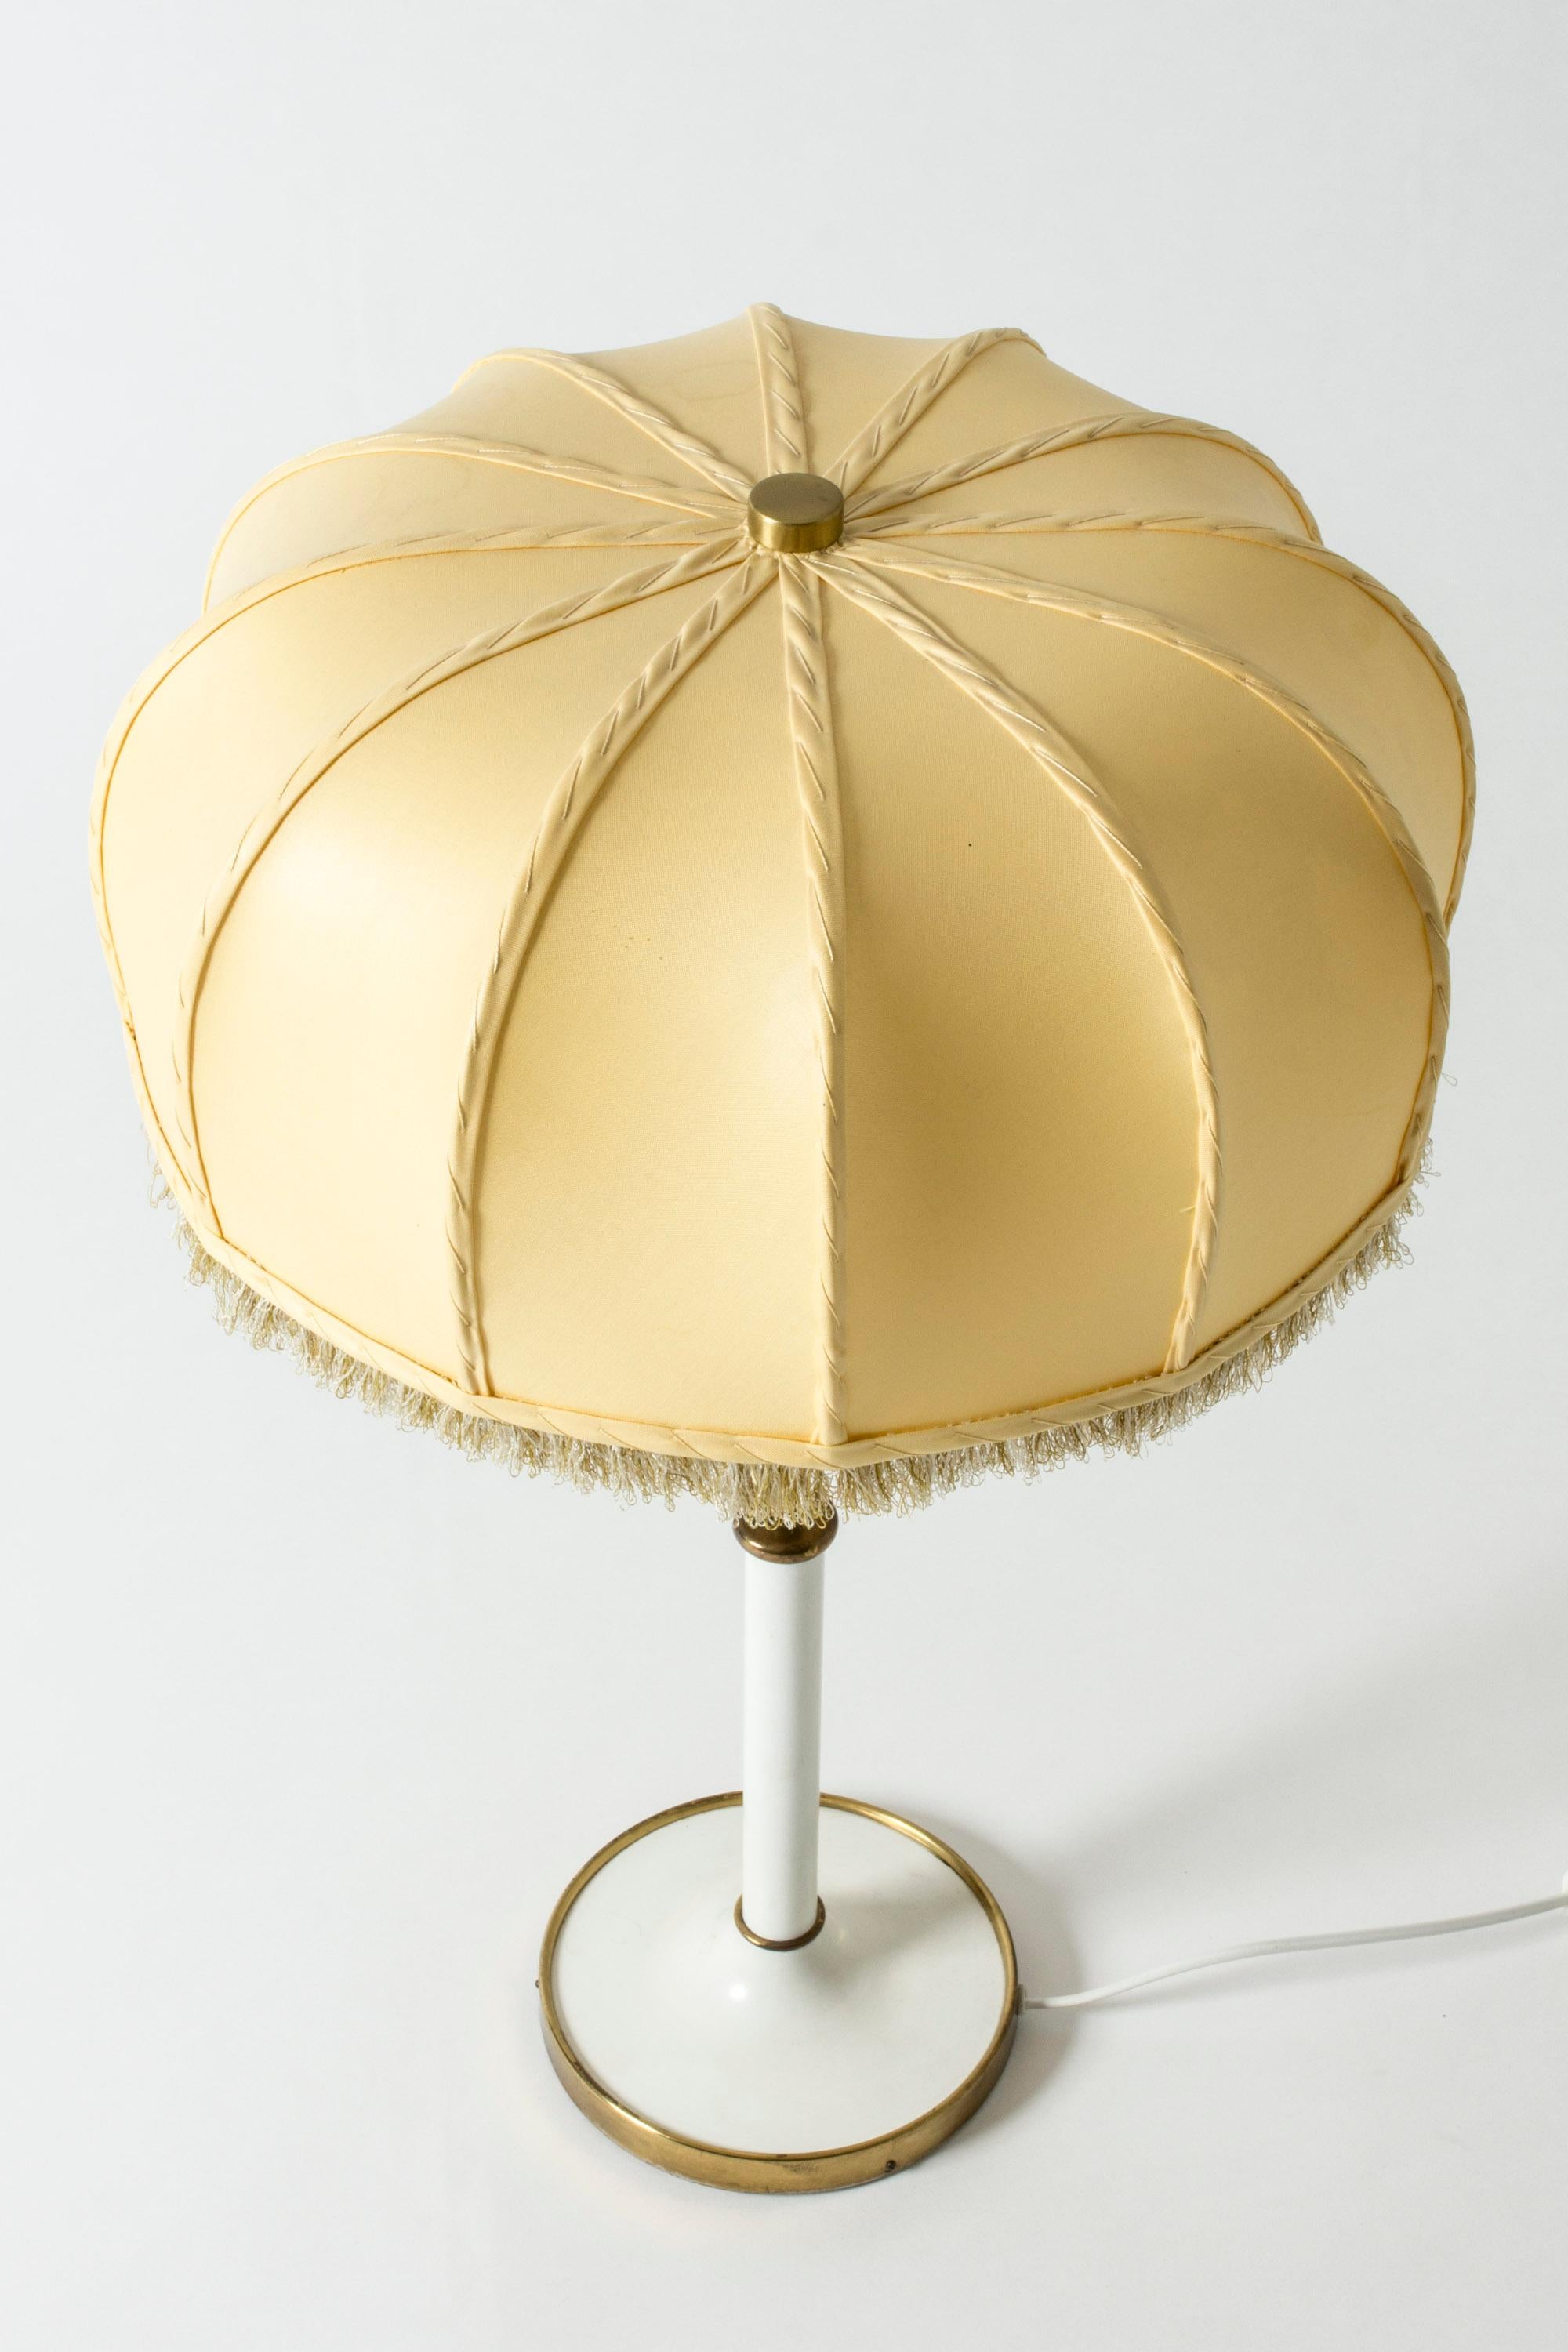 josef frank table lamp